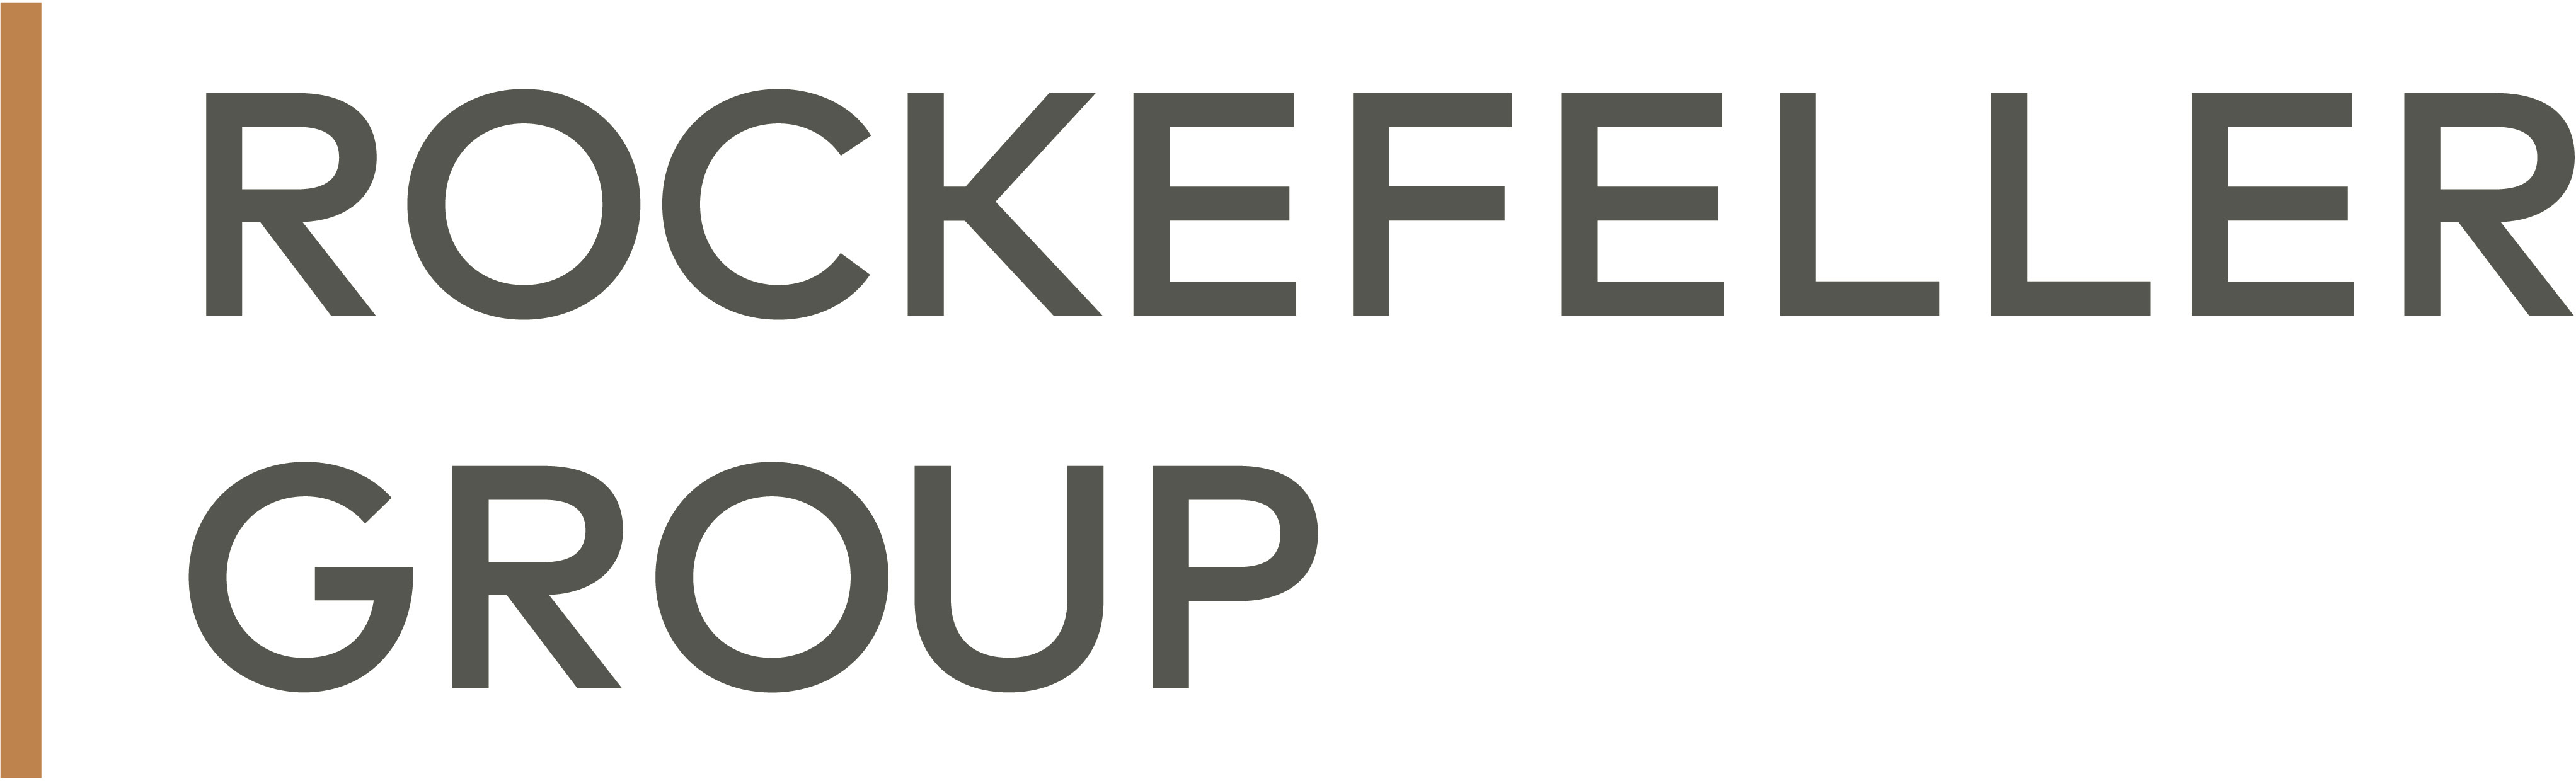 Rockefeller Group Telecommunications Services Logo, image, download ...